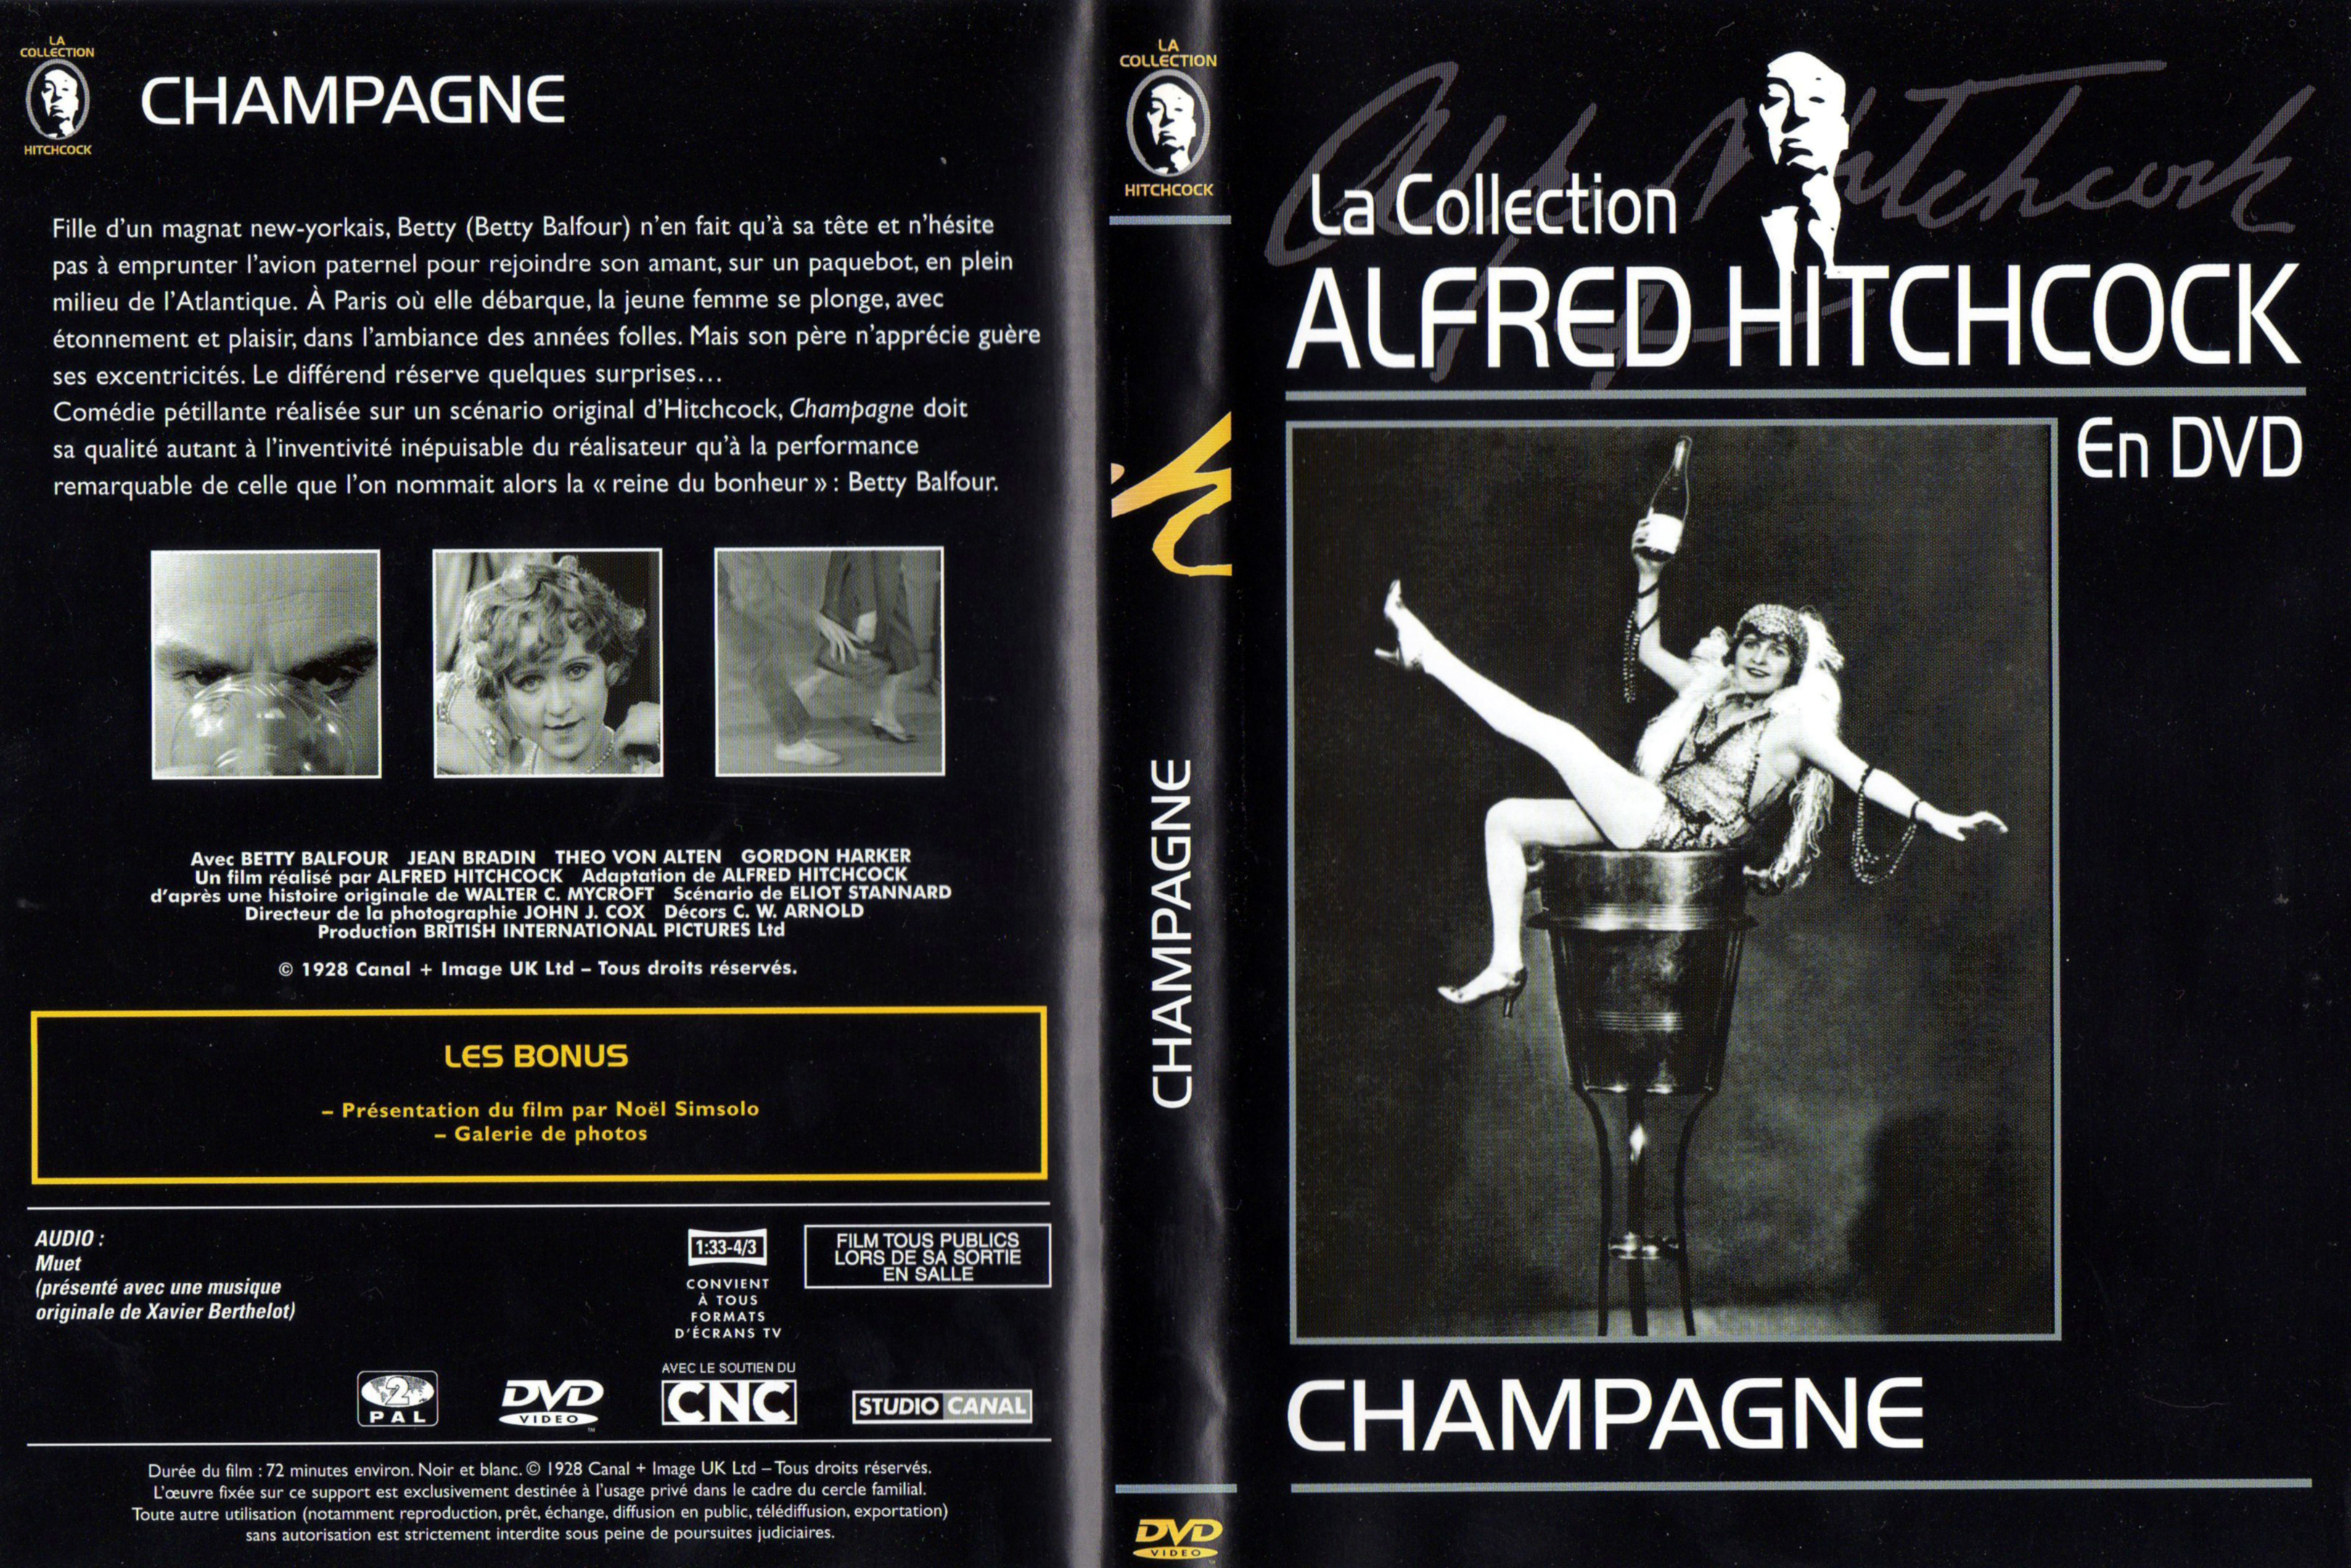 Jaquette DVD Champagne